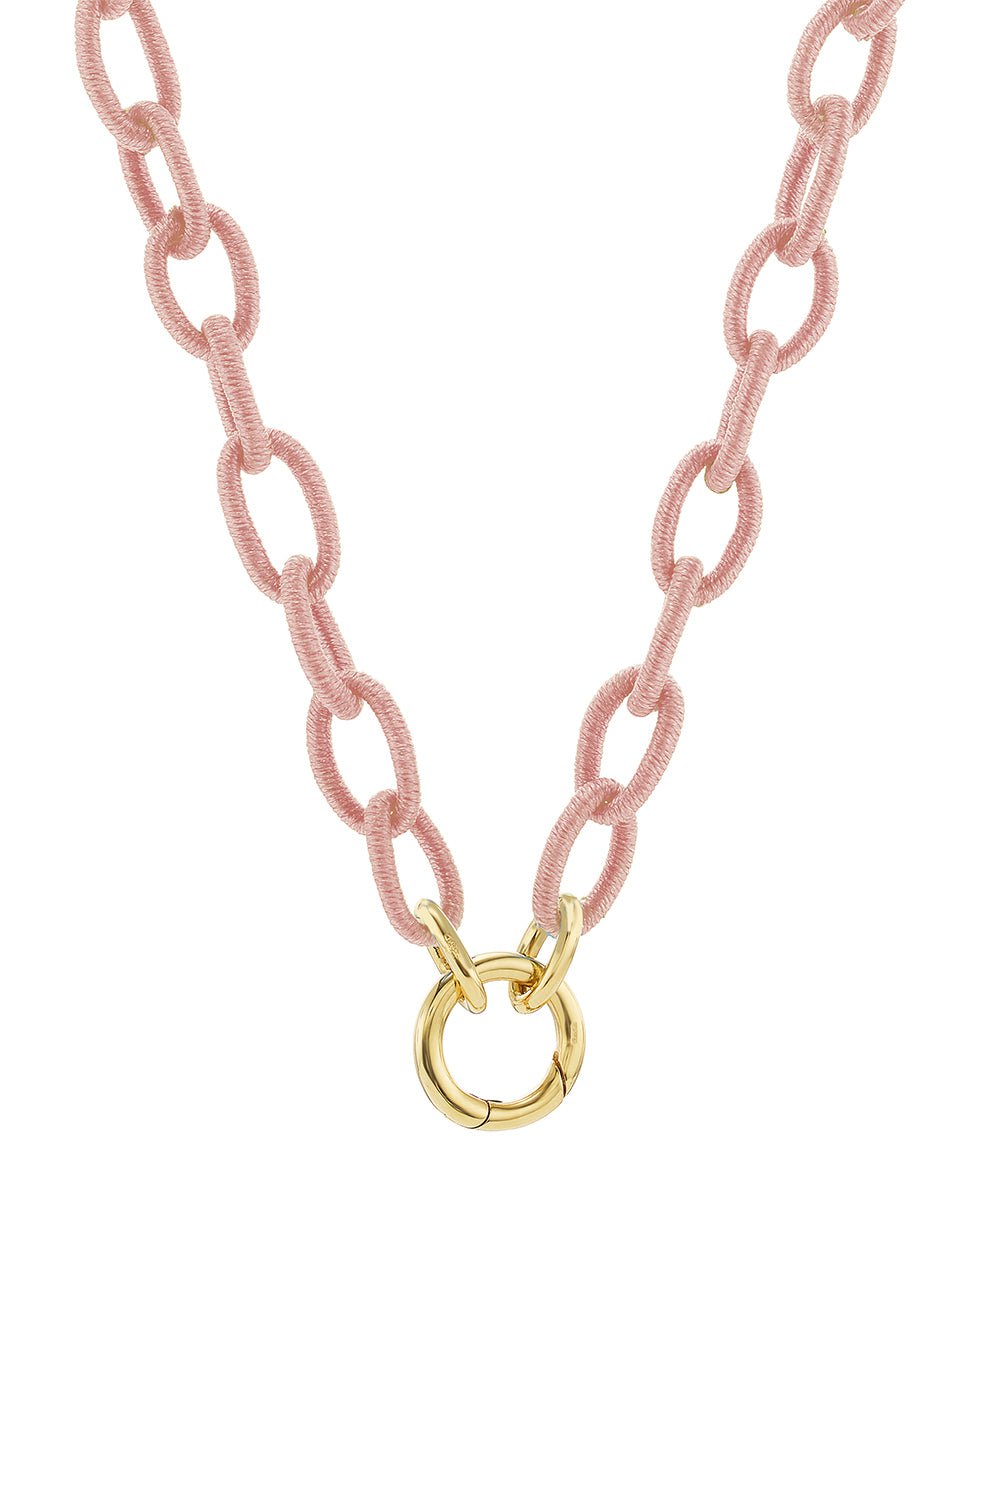 Anna MACCIERI Rossi: Pale Pink Thread Link Necklace